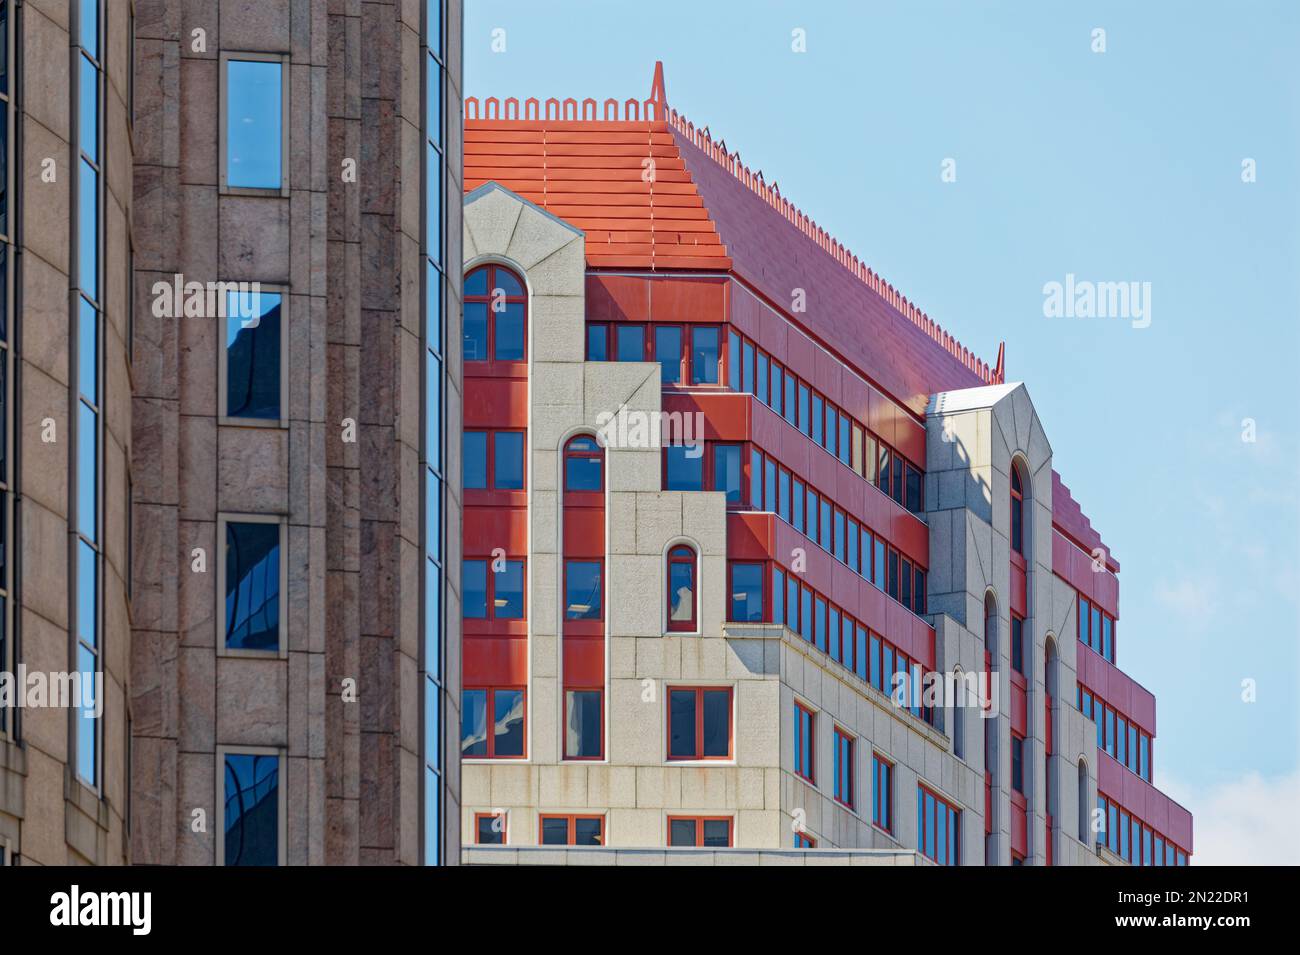 Boston Financial District: 99 Summer Street’s distinctive red crown makes it a downtown landmark. Stock Photo